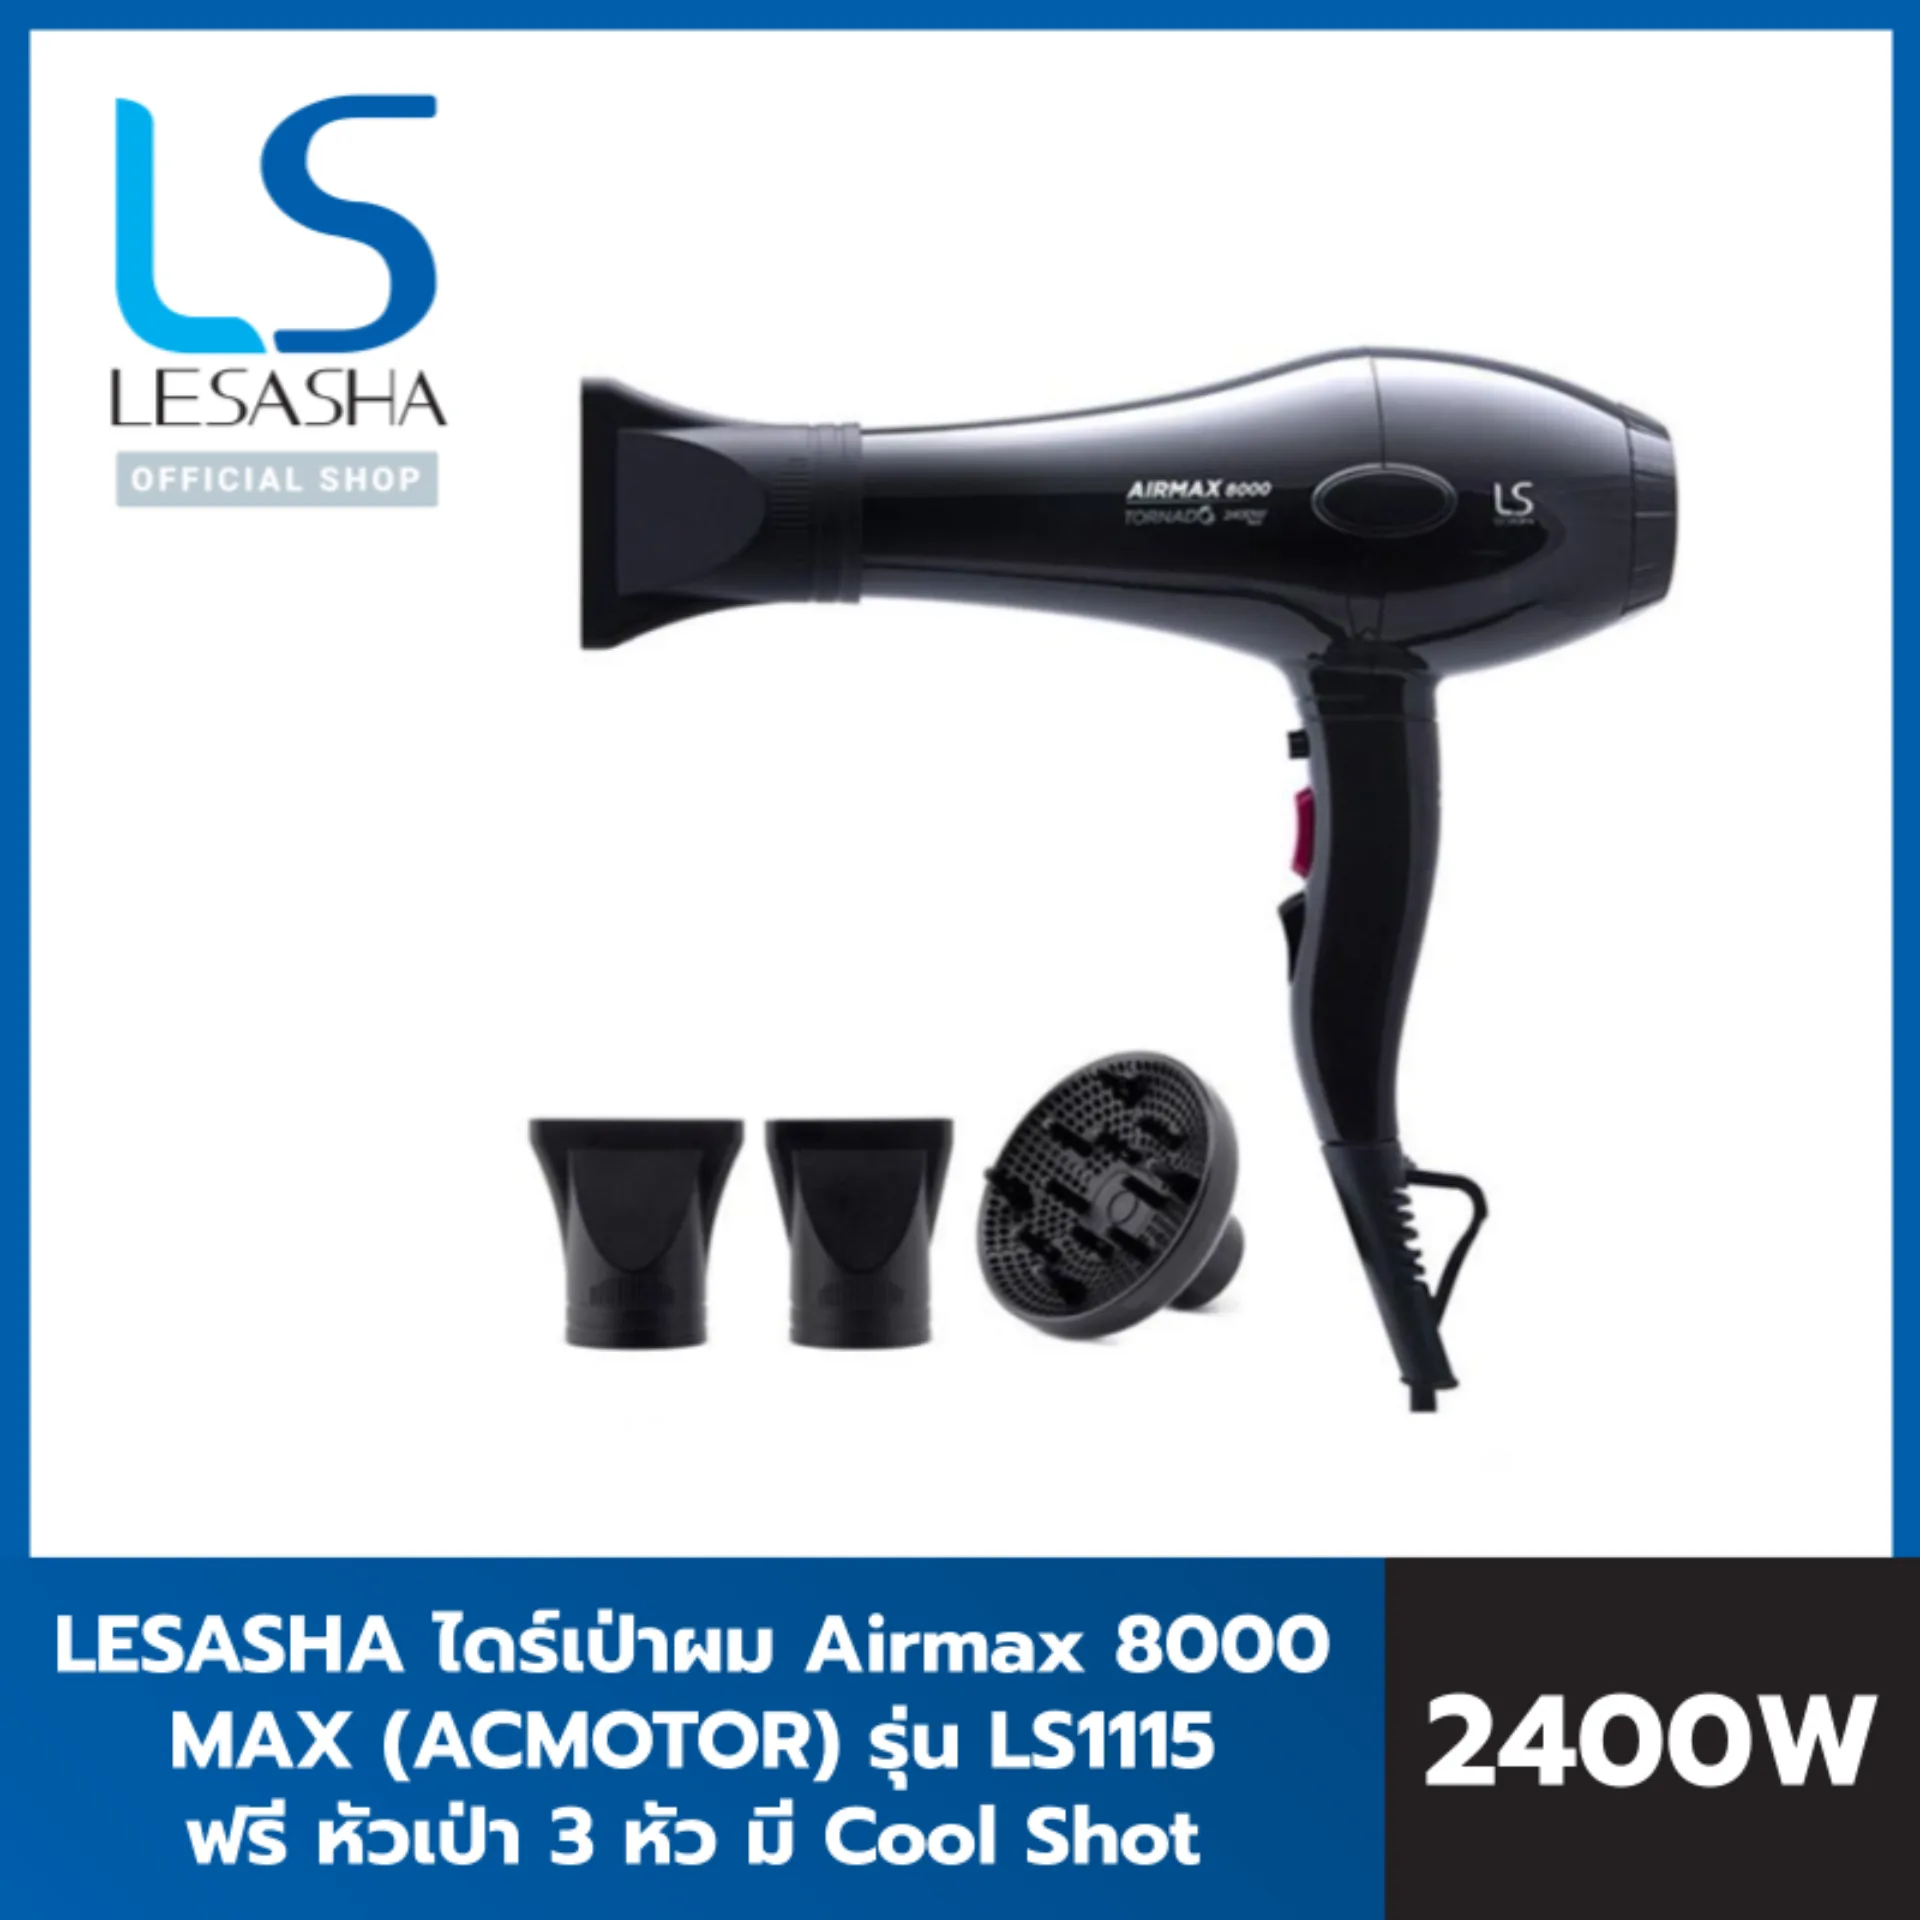 LESASHA ไดร์เป่าผม Airmax 8000 MAX (ACMOTOR) รุ่น LS1115